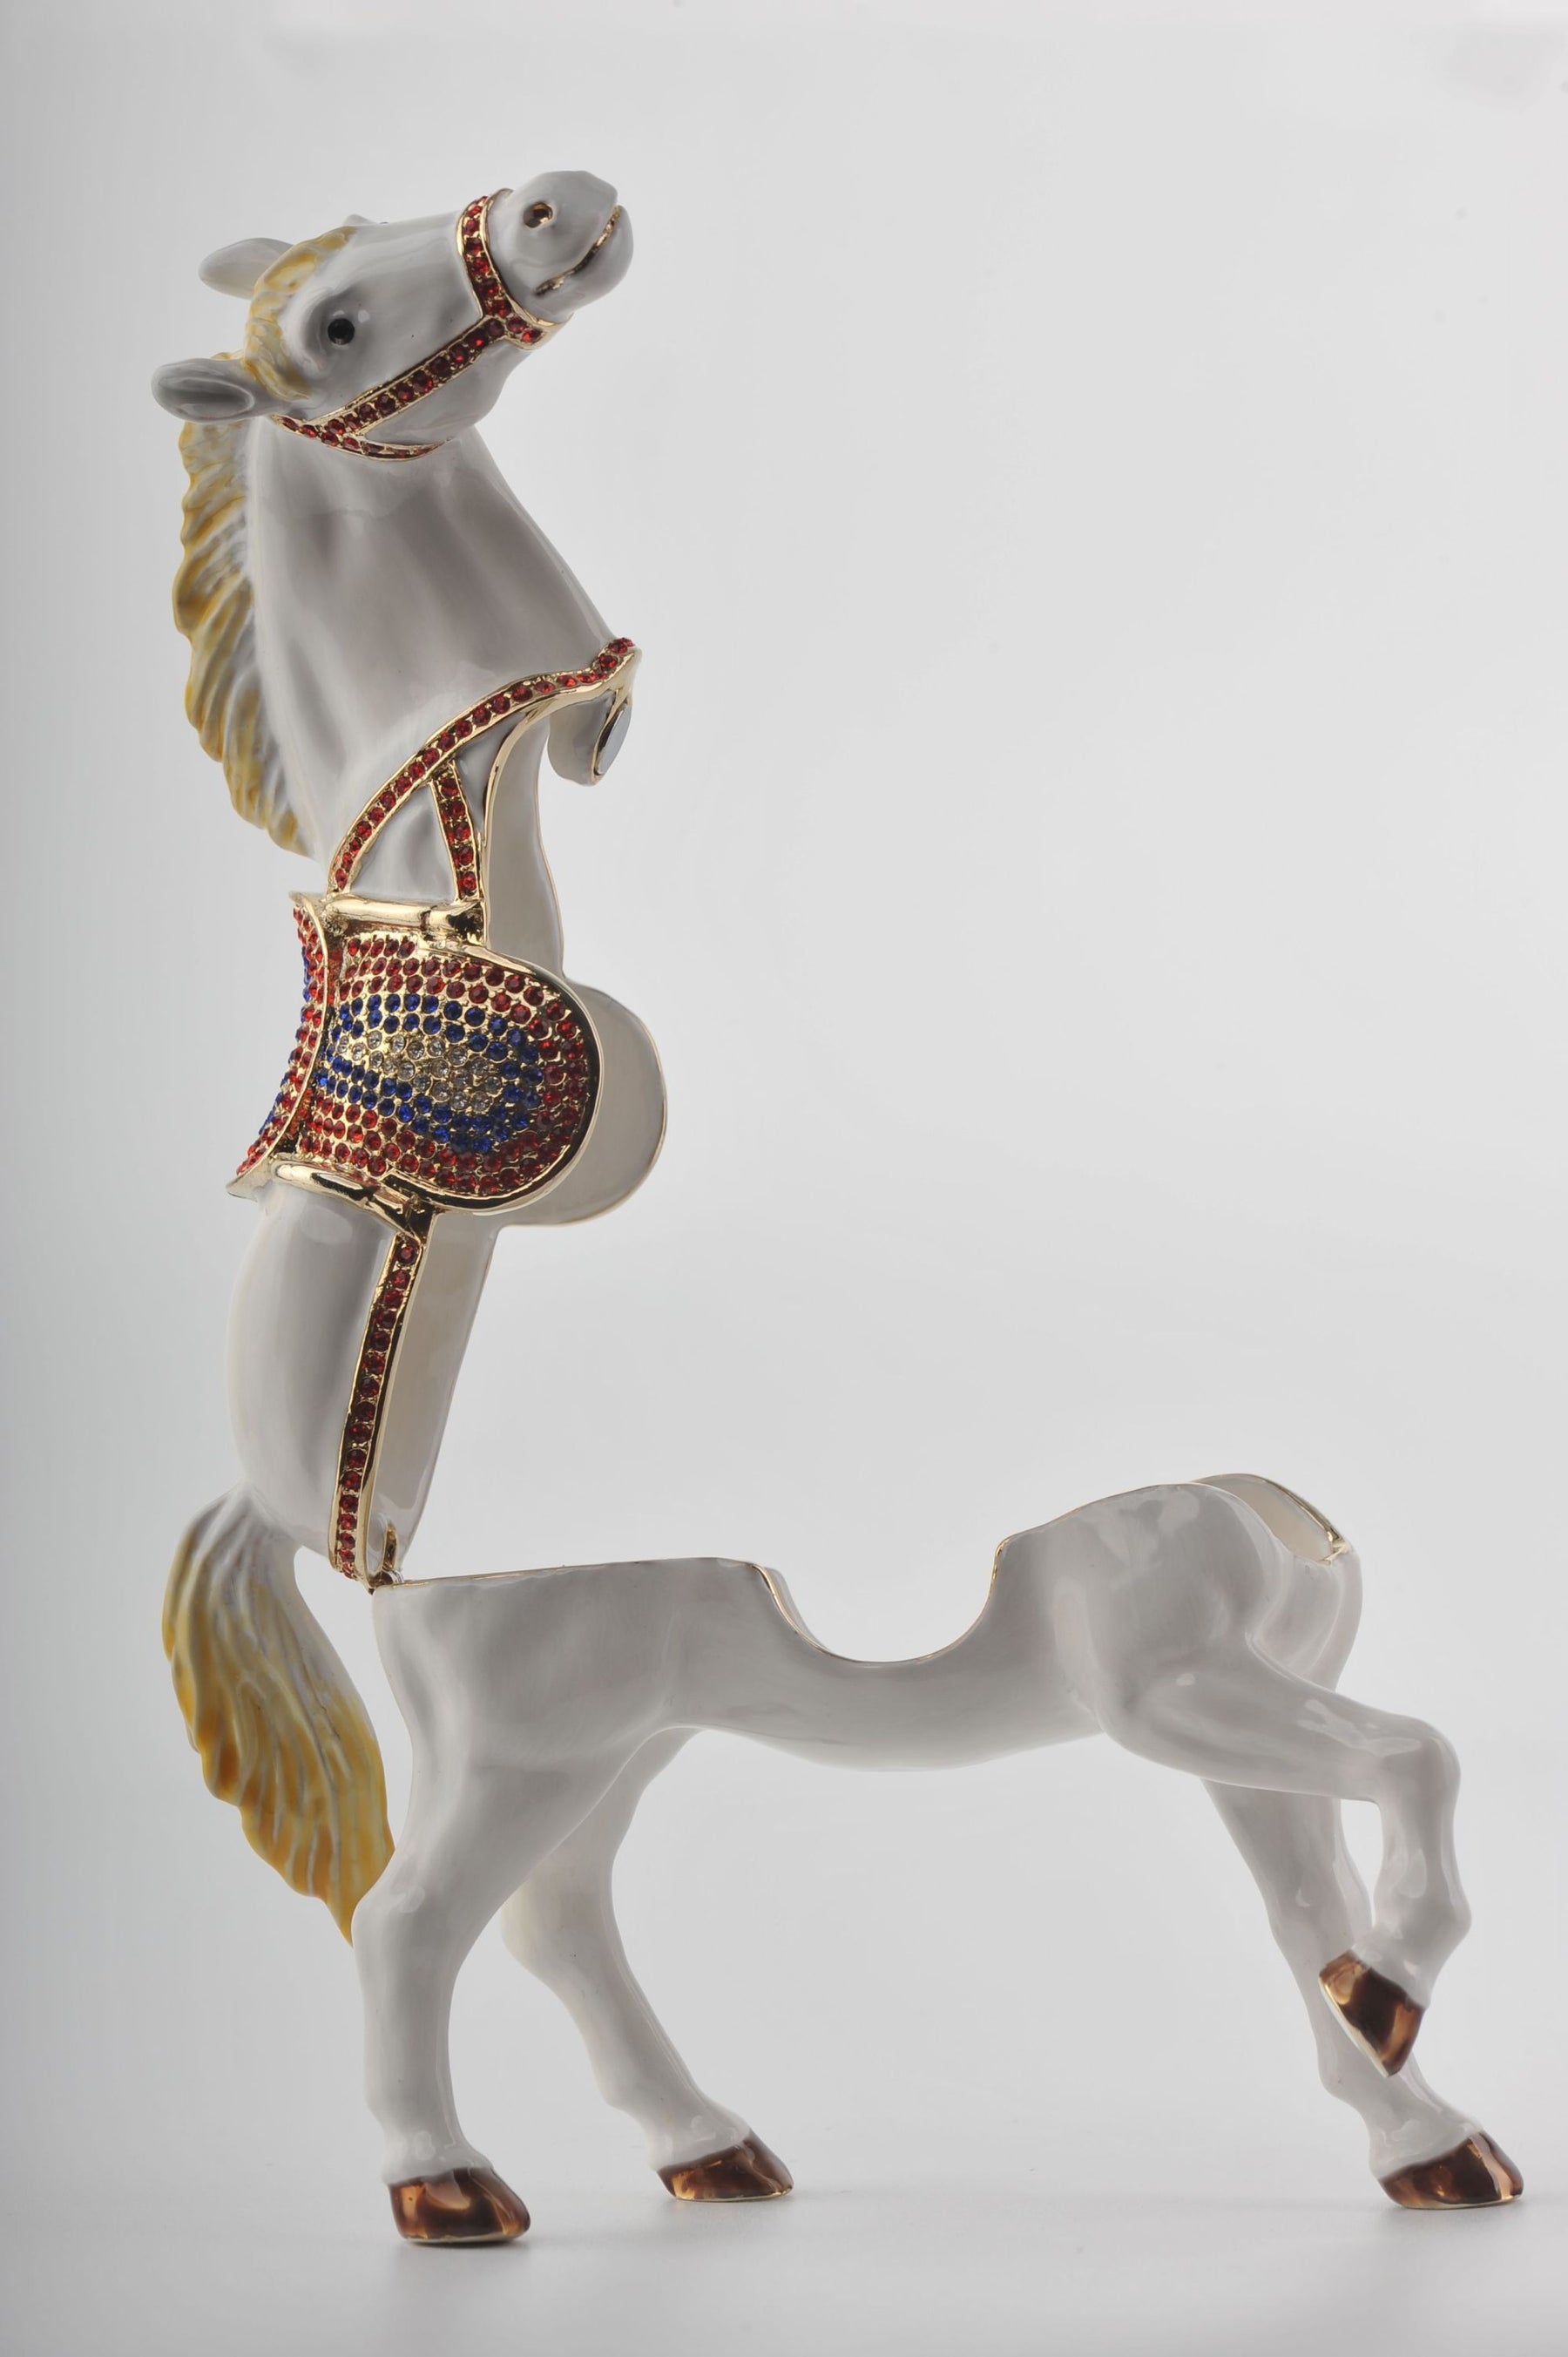 Keren Kopal White Horse with Crystal Saddle  137.50